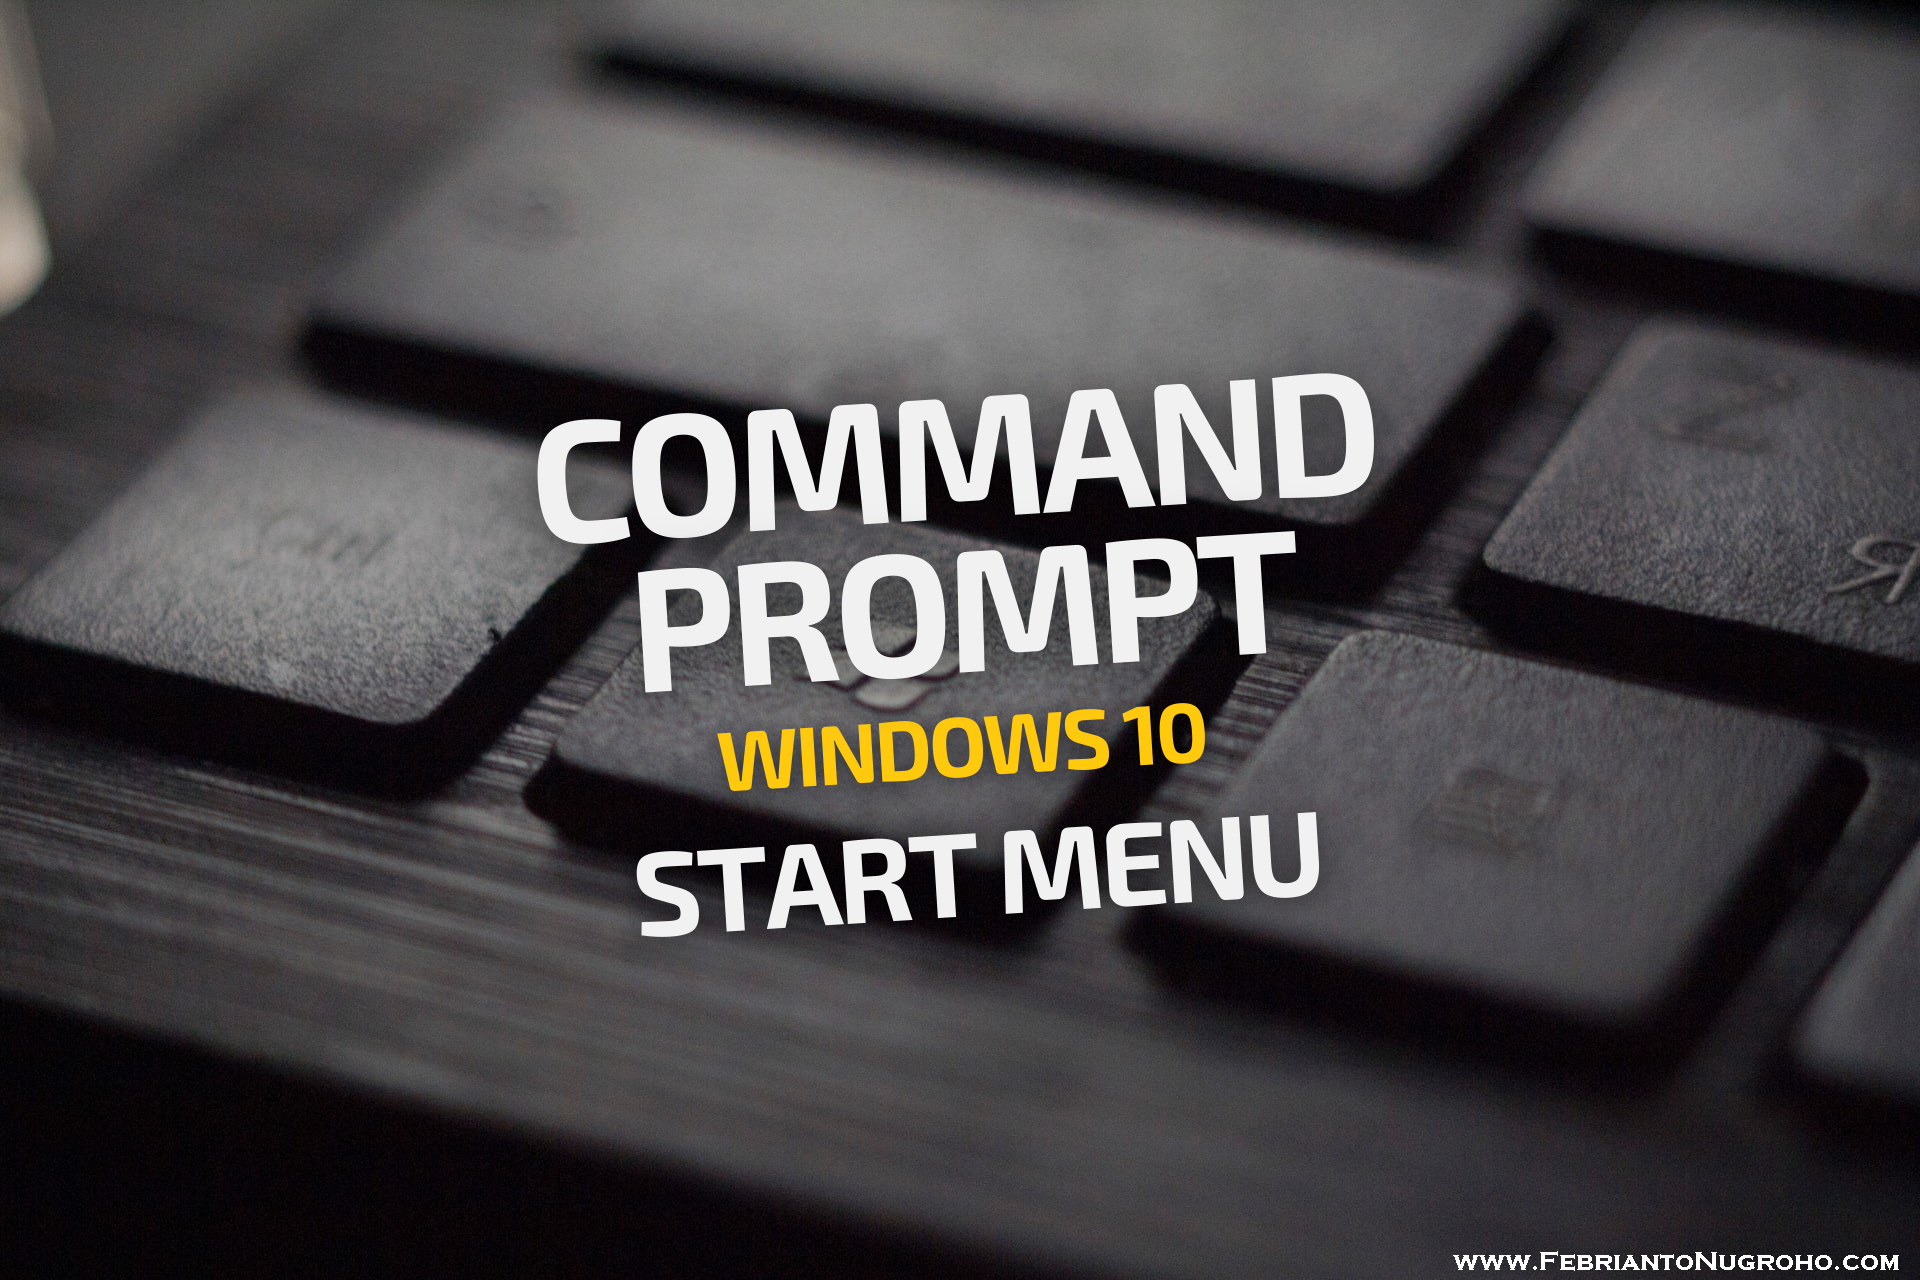 Membuka Command Prompt di Windows 10 via Start Menu